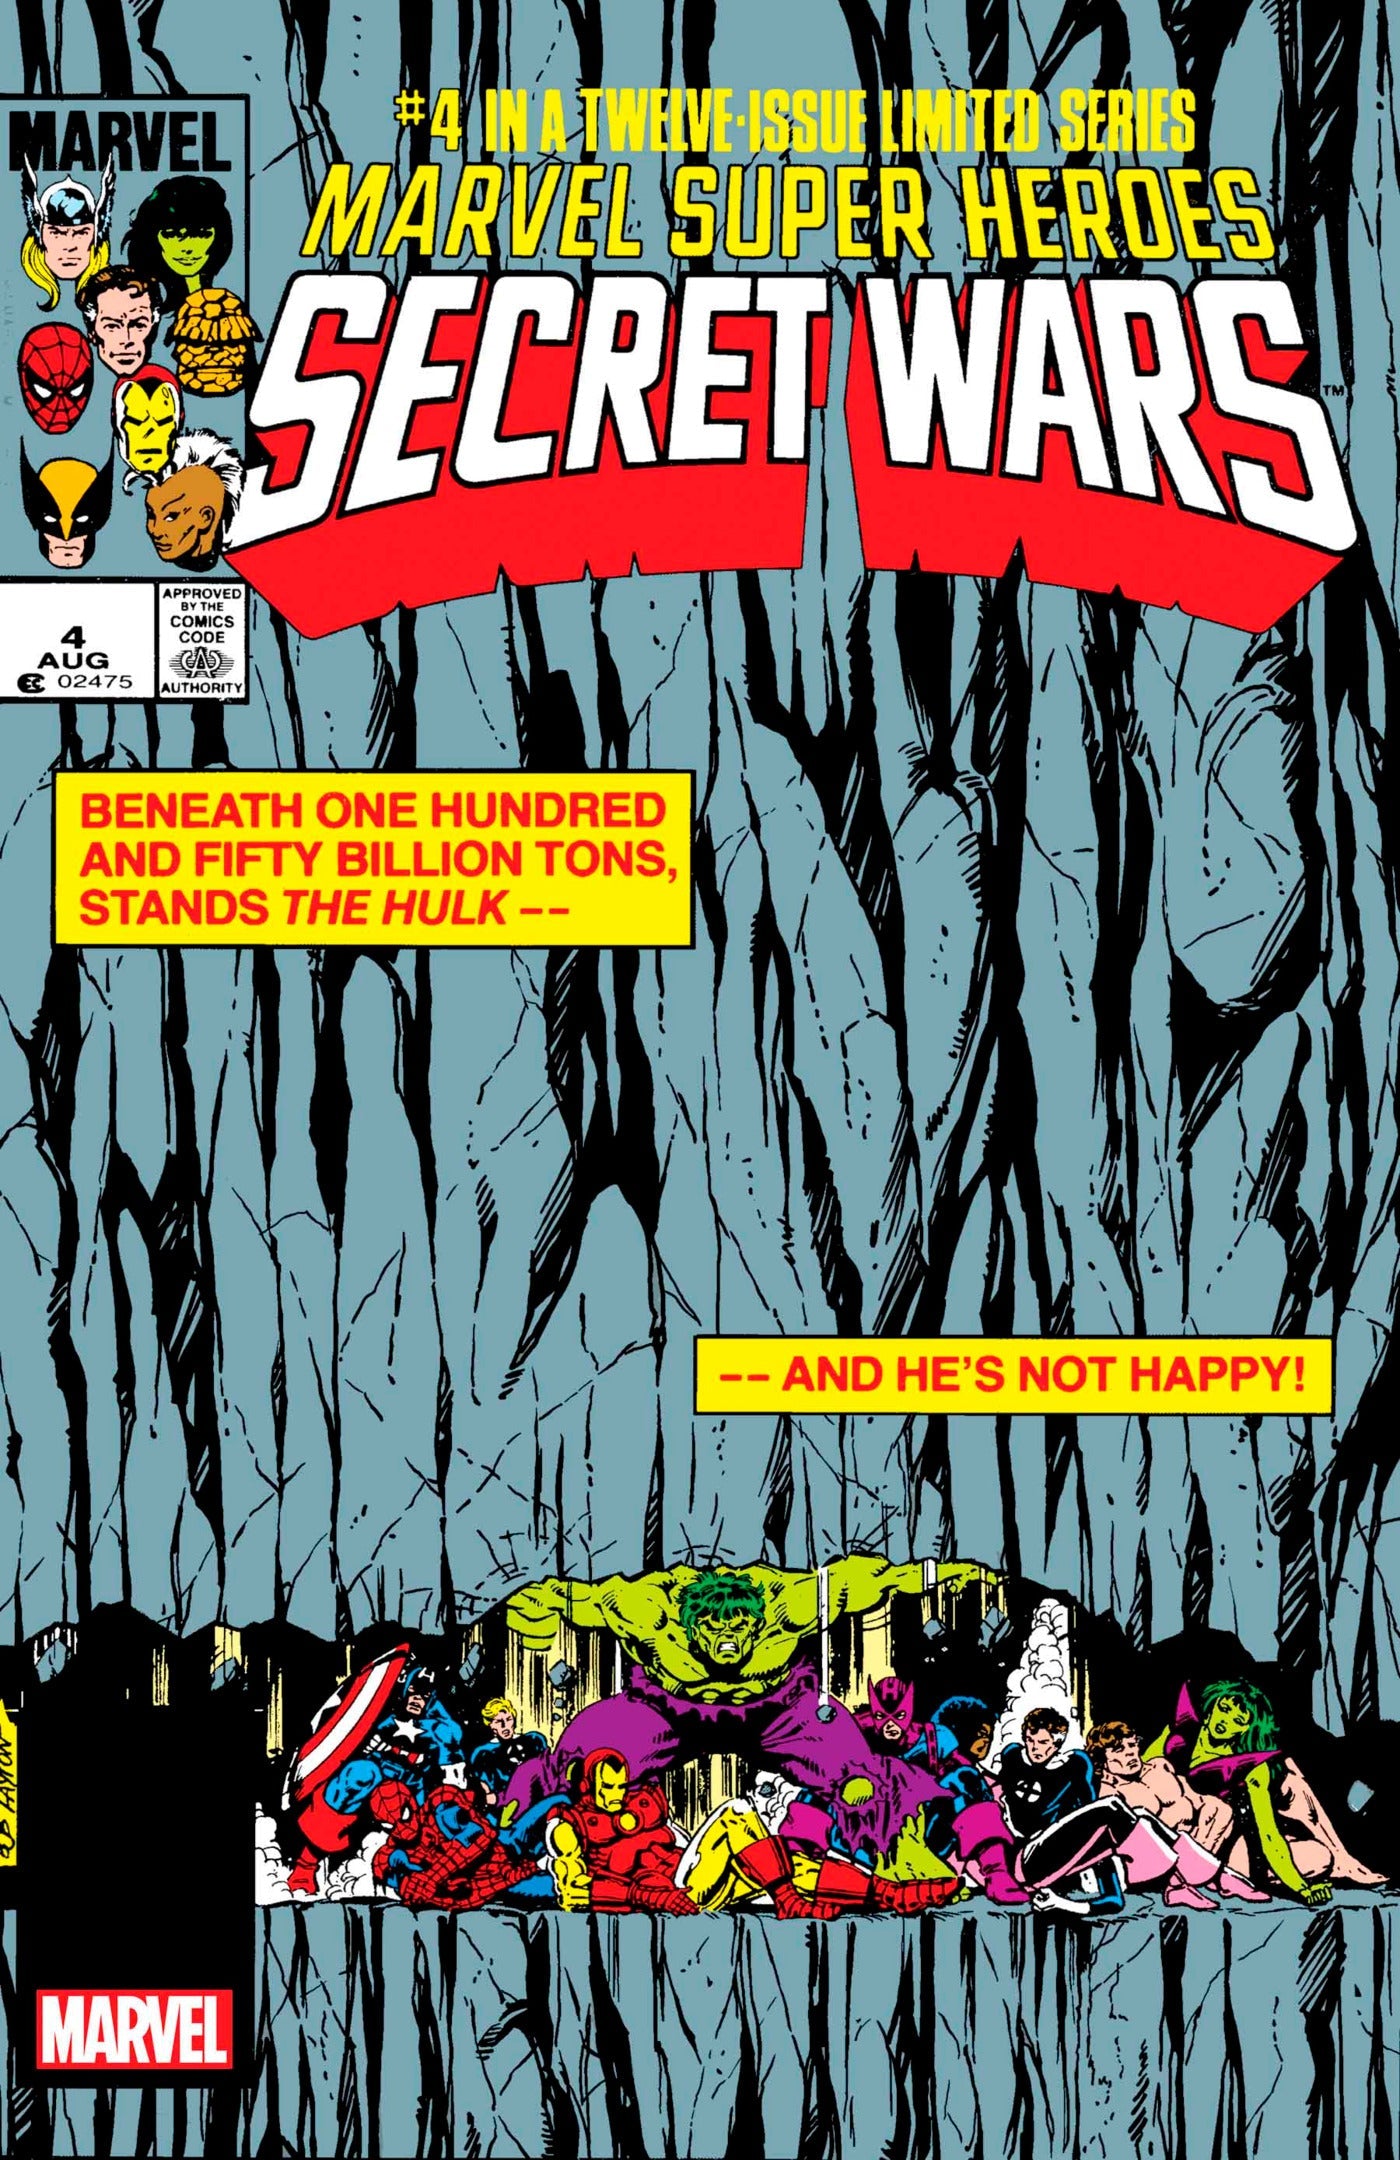 MARVEL SUPER HEROES SECRET WARS #4 FACSIMILE EDITION